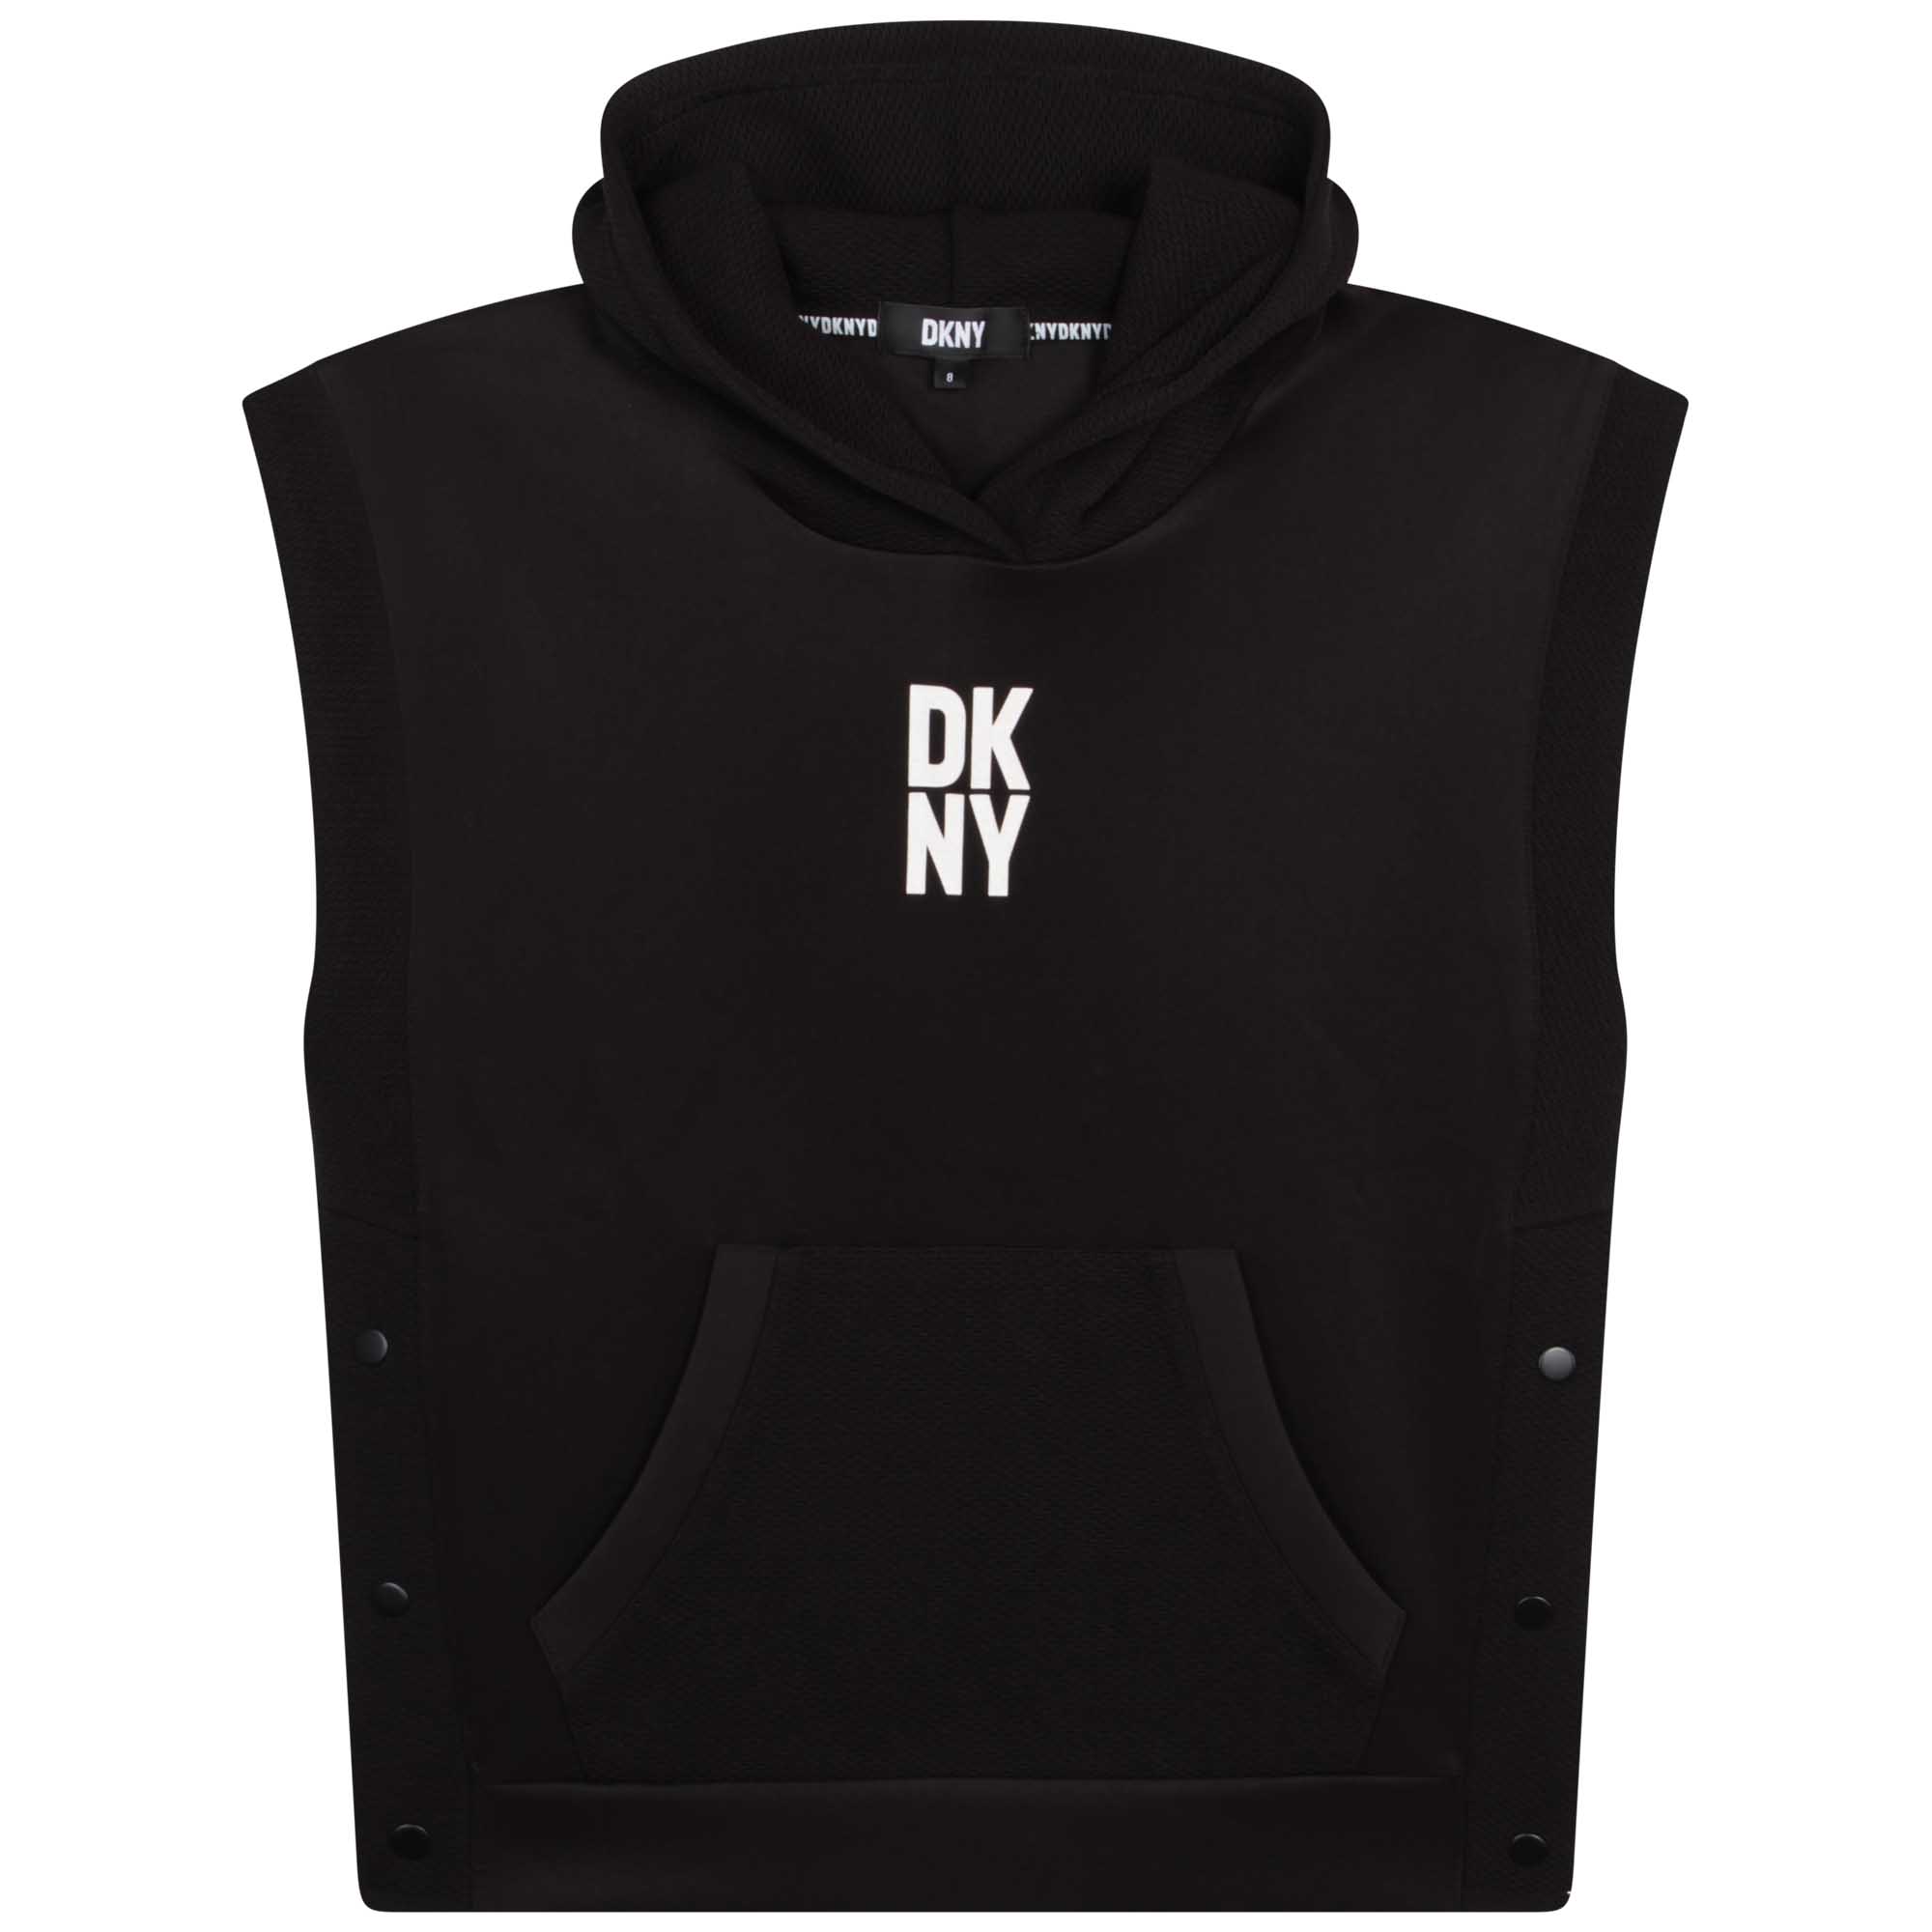 Sleeveless sweatshirt DKNY for BOY